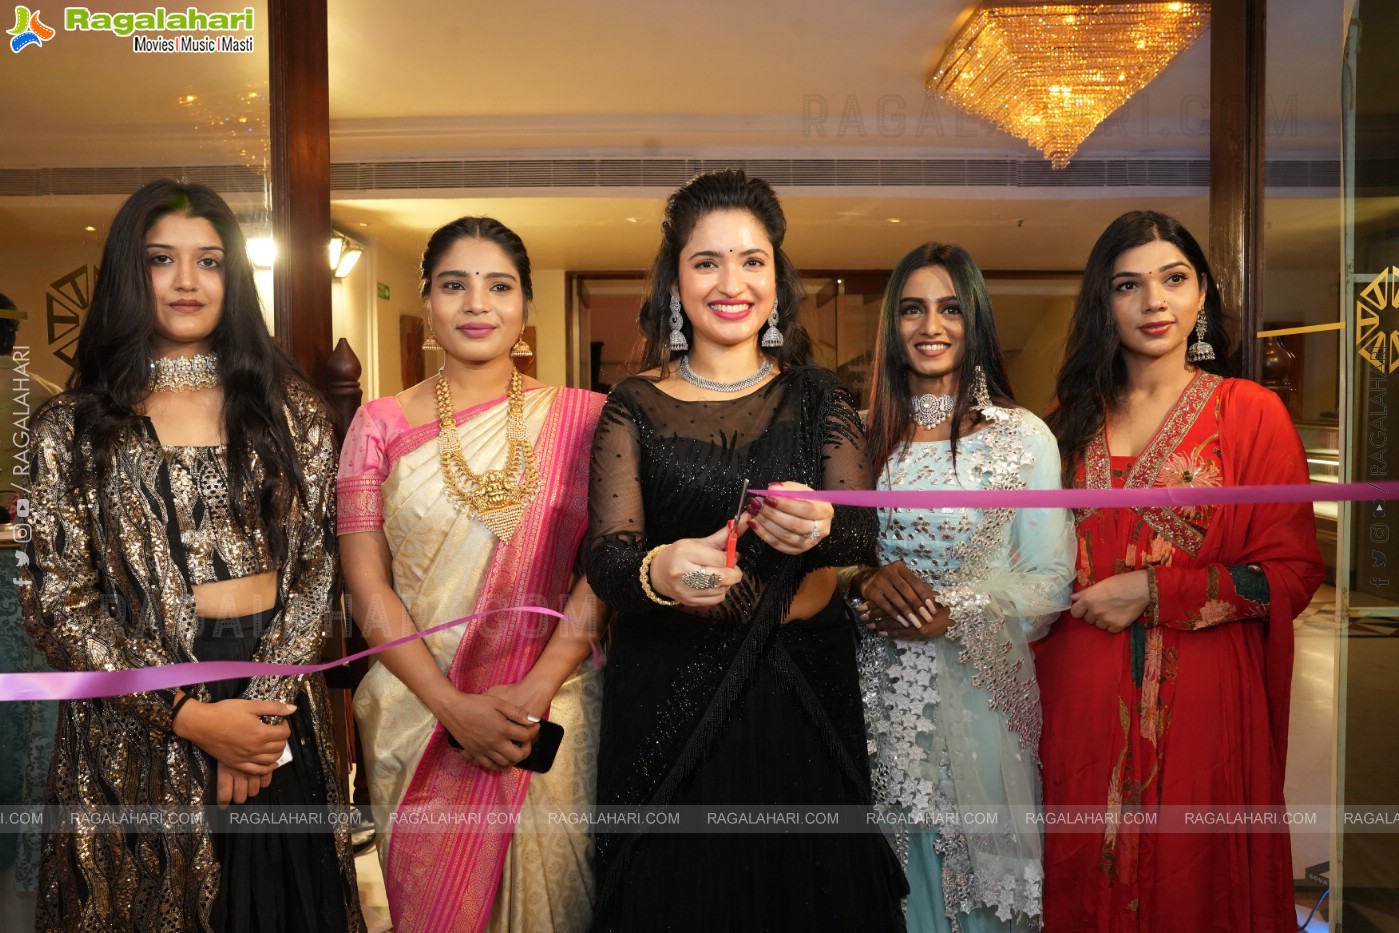 Inauguration of Sutraa Lifestyle Exhibition at Hotel Taj Krishna, Hyderabad